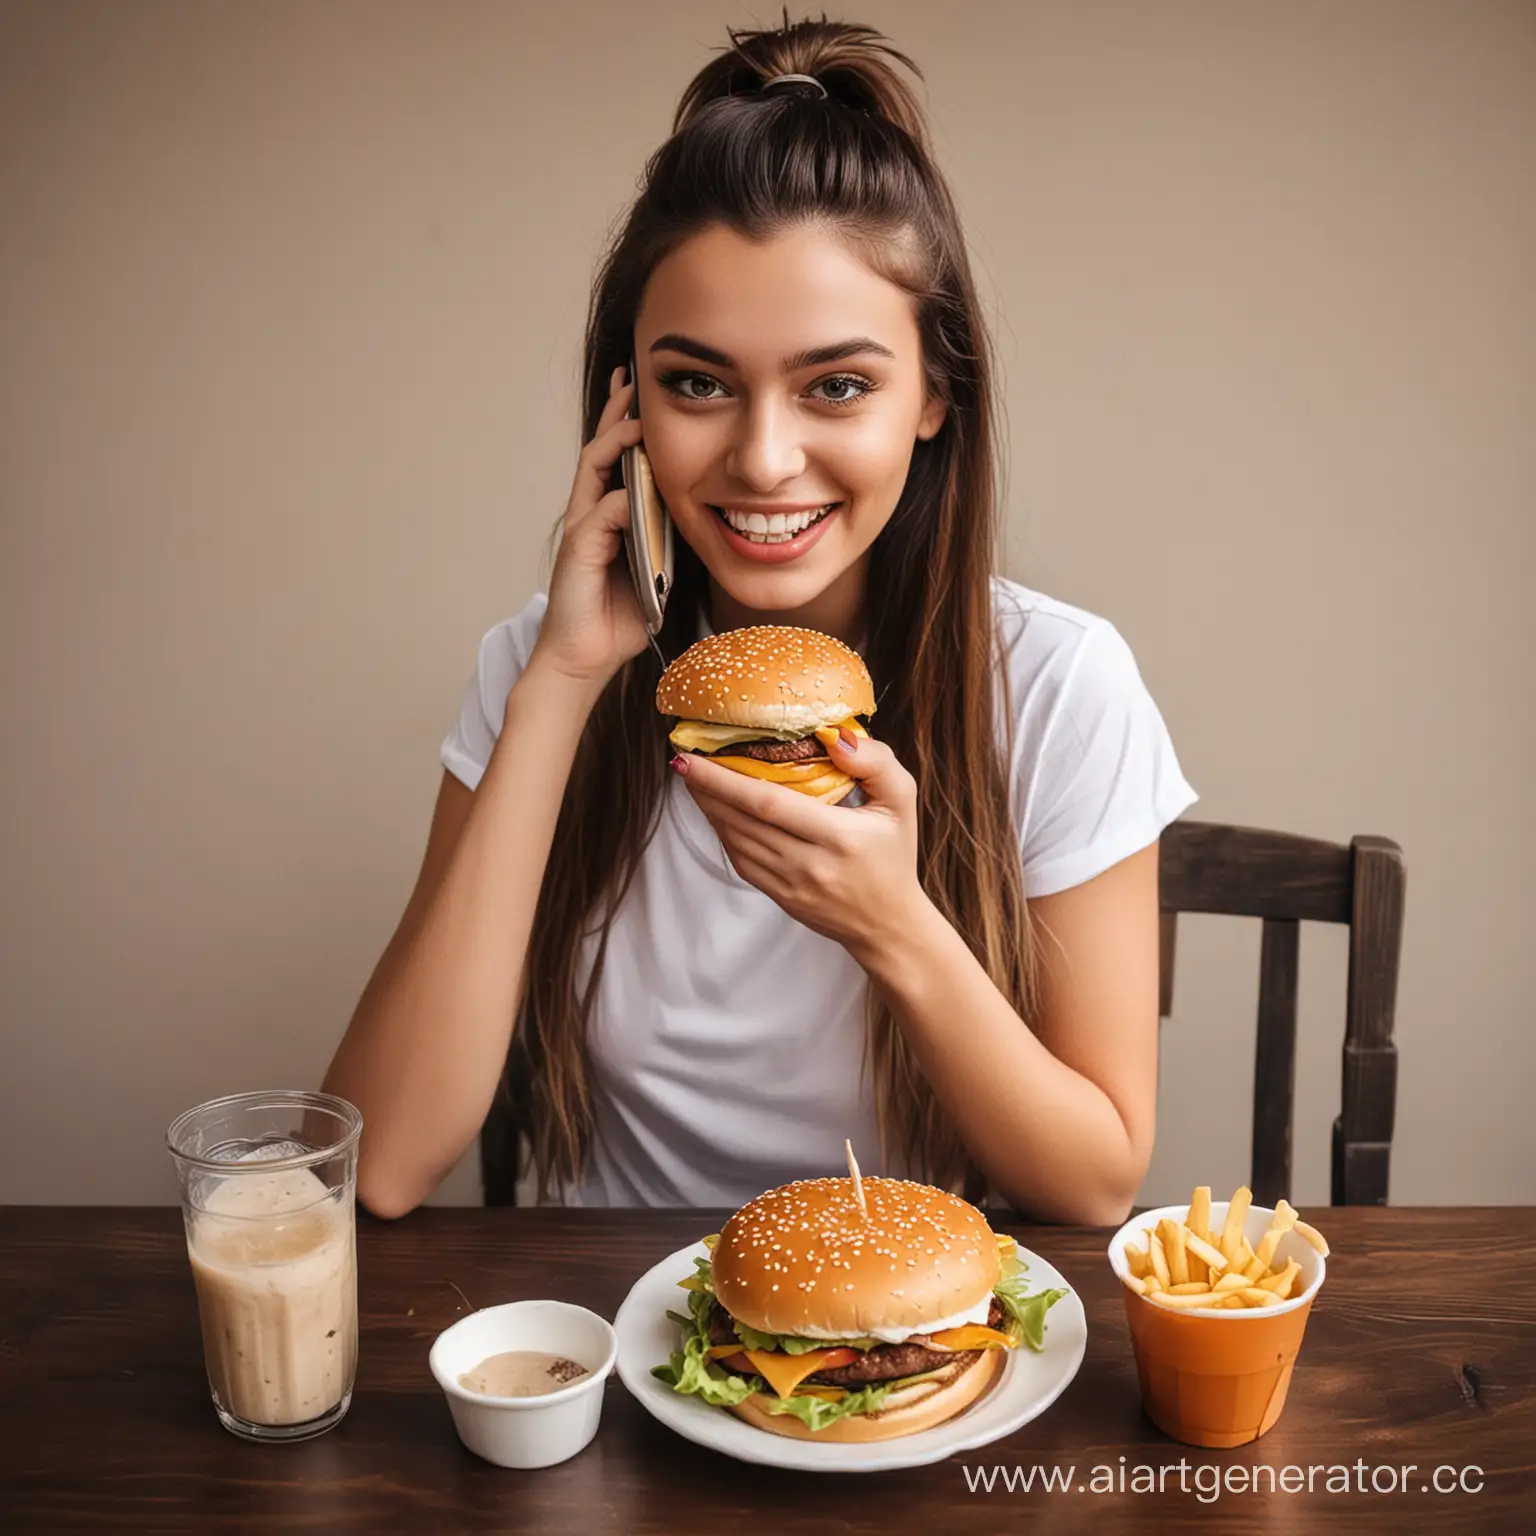 Teenage-Girl-Enjoying-Fast-Food-While-Using-Smartphone